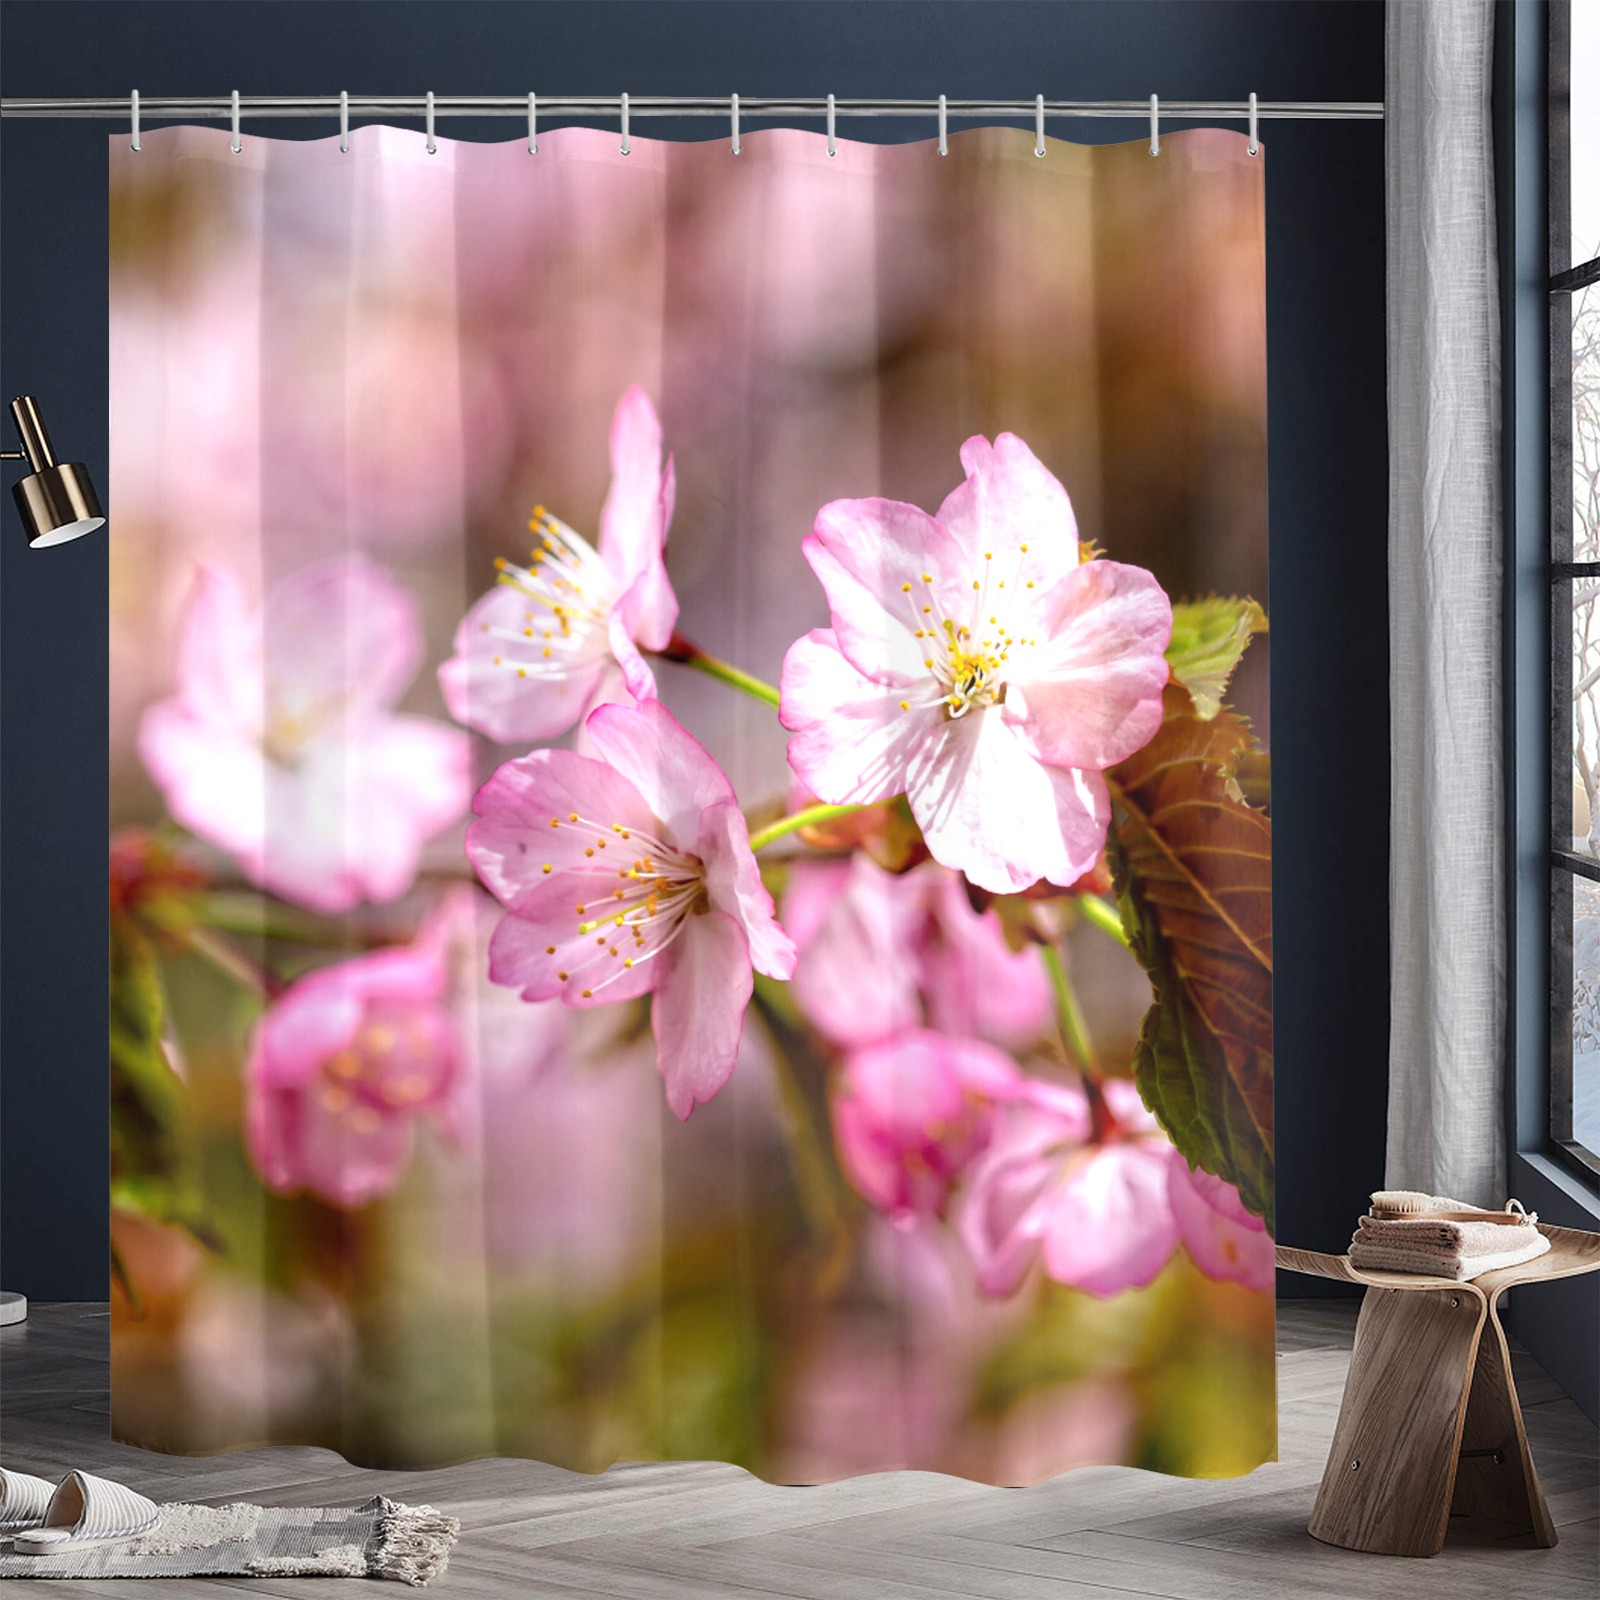 The festival of pink sakura cherry blossoms. Shower Curtain 72"x84"